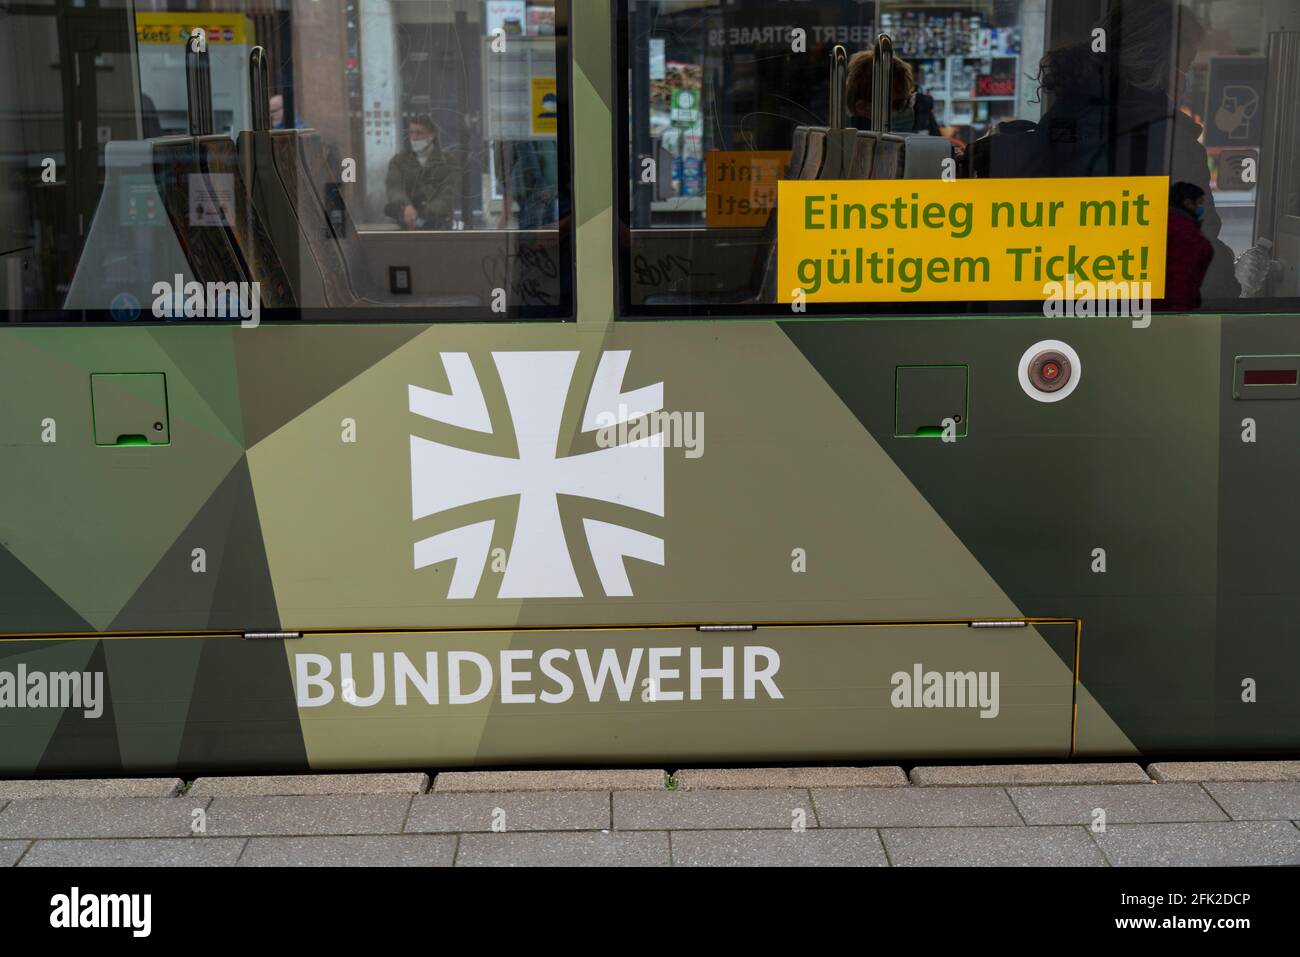 Tramway con pubblicità per le forze armate tedesche, a Mülheim an der Ruhr, NRW, Germania, Foto Stock